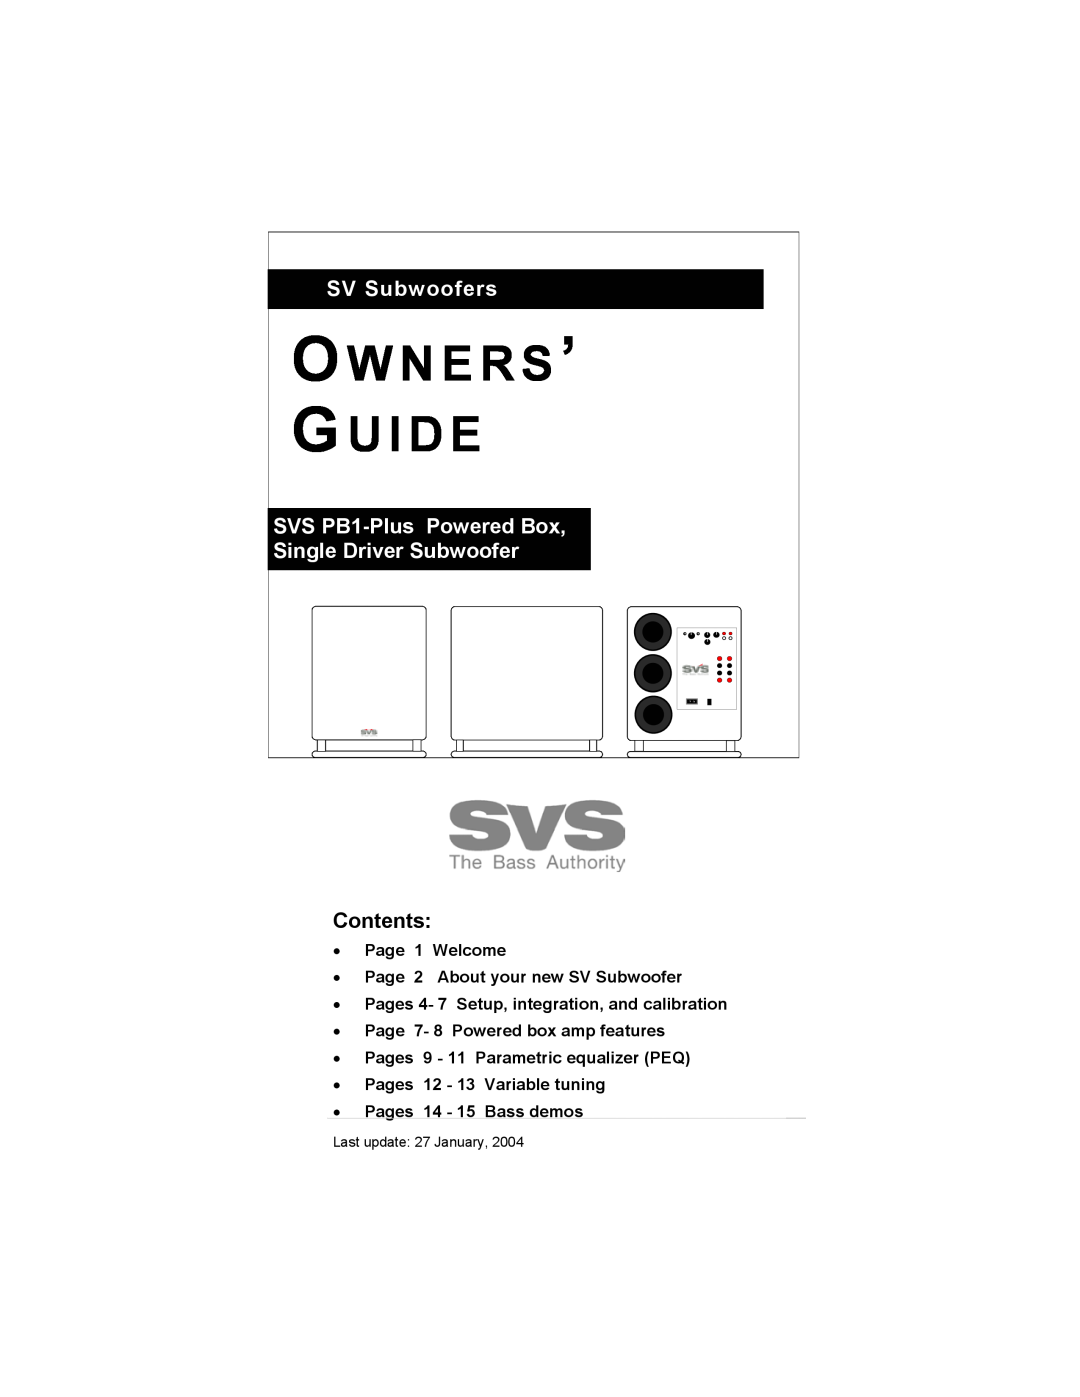 SV Sound SVS PB1-Plus manual Contents, O W N E R S ’ G U I D E, SV Subwoofers, Last update 27 January 